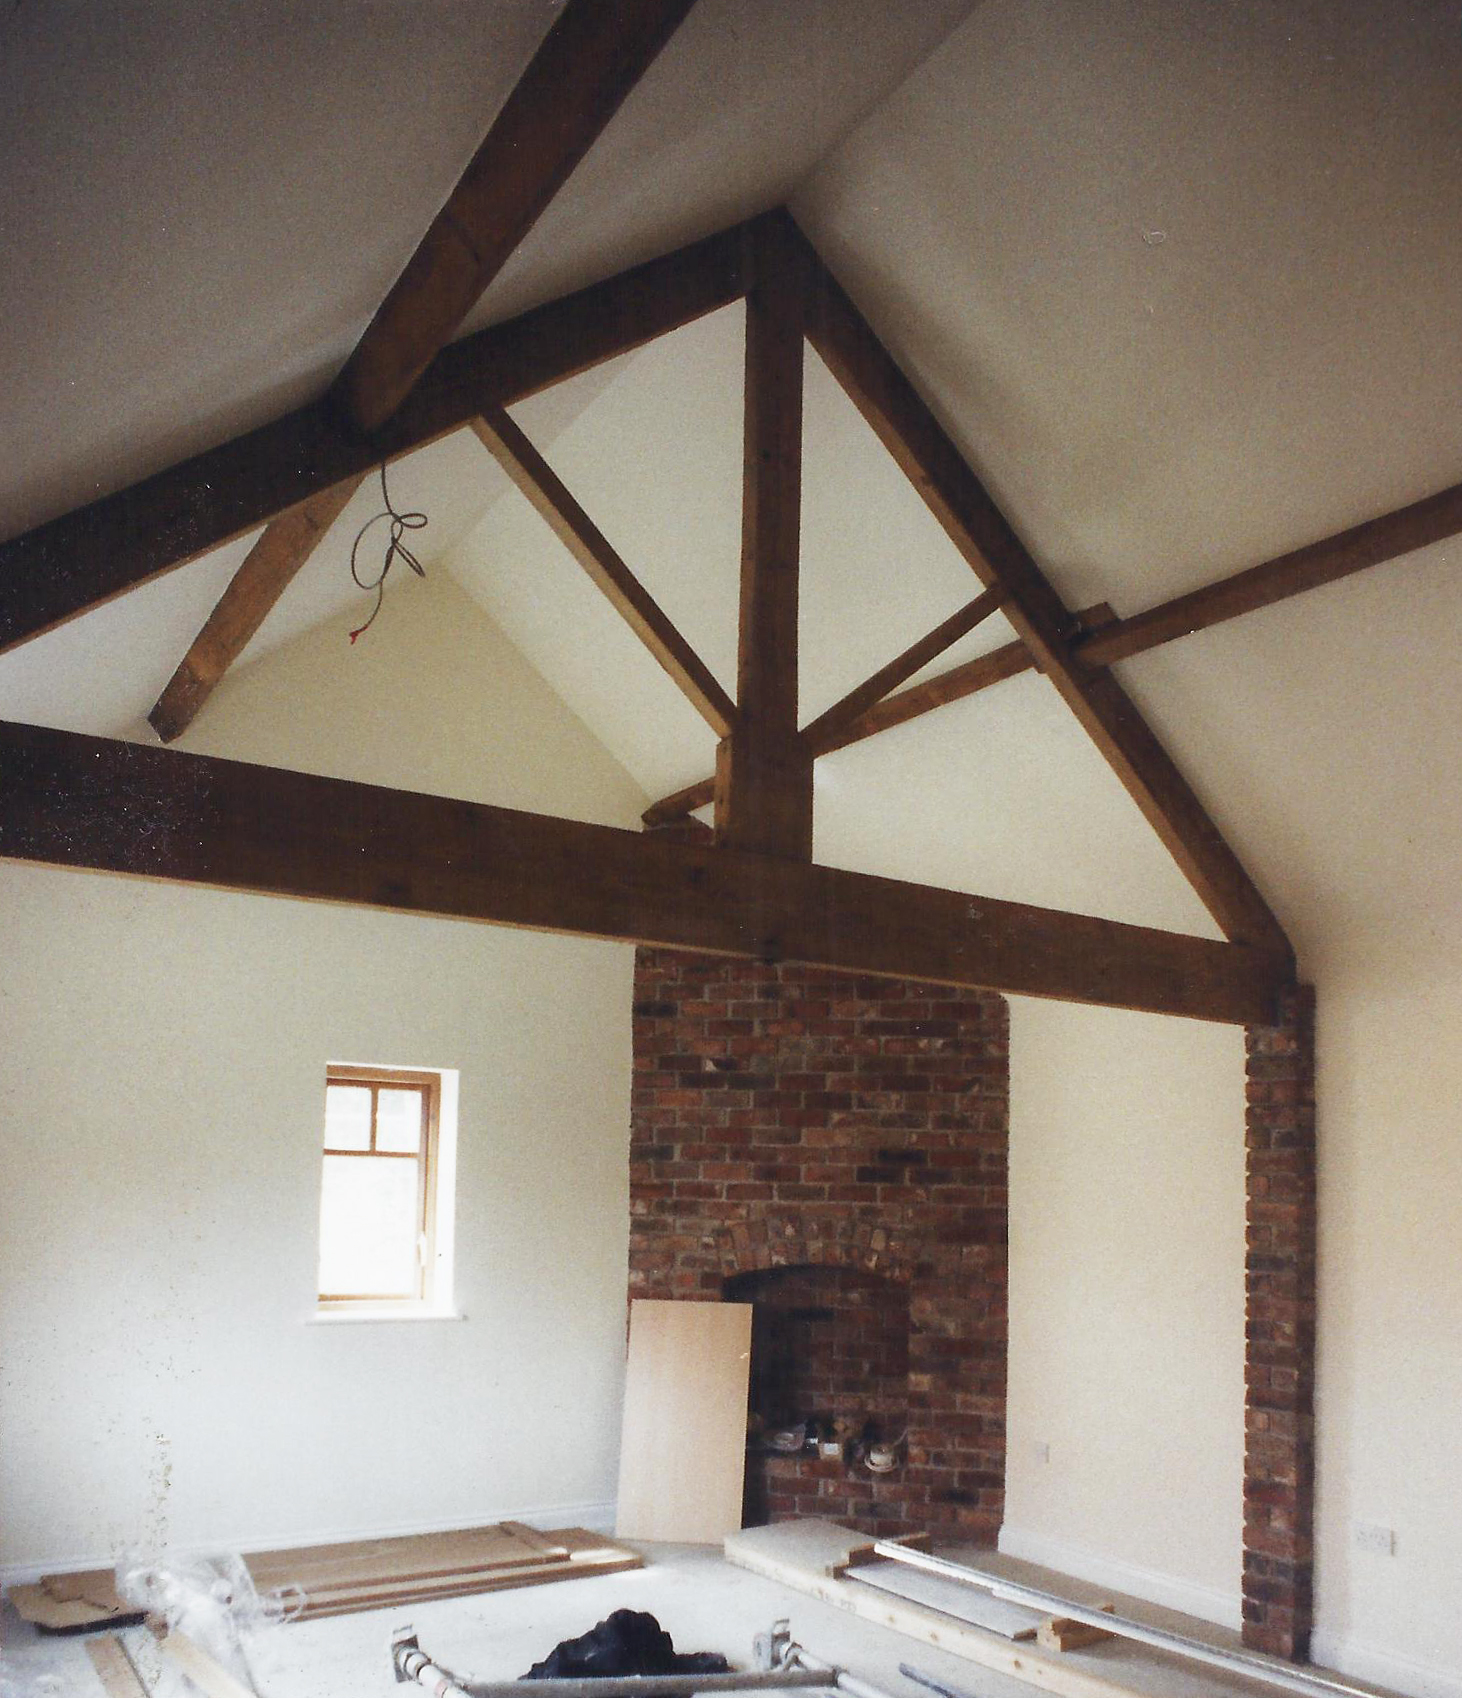 Timber Framed Interior - Brecks Farm - North Yorkshire Architects - Samuel Kendall Associates